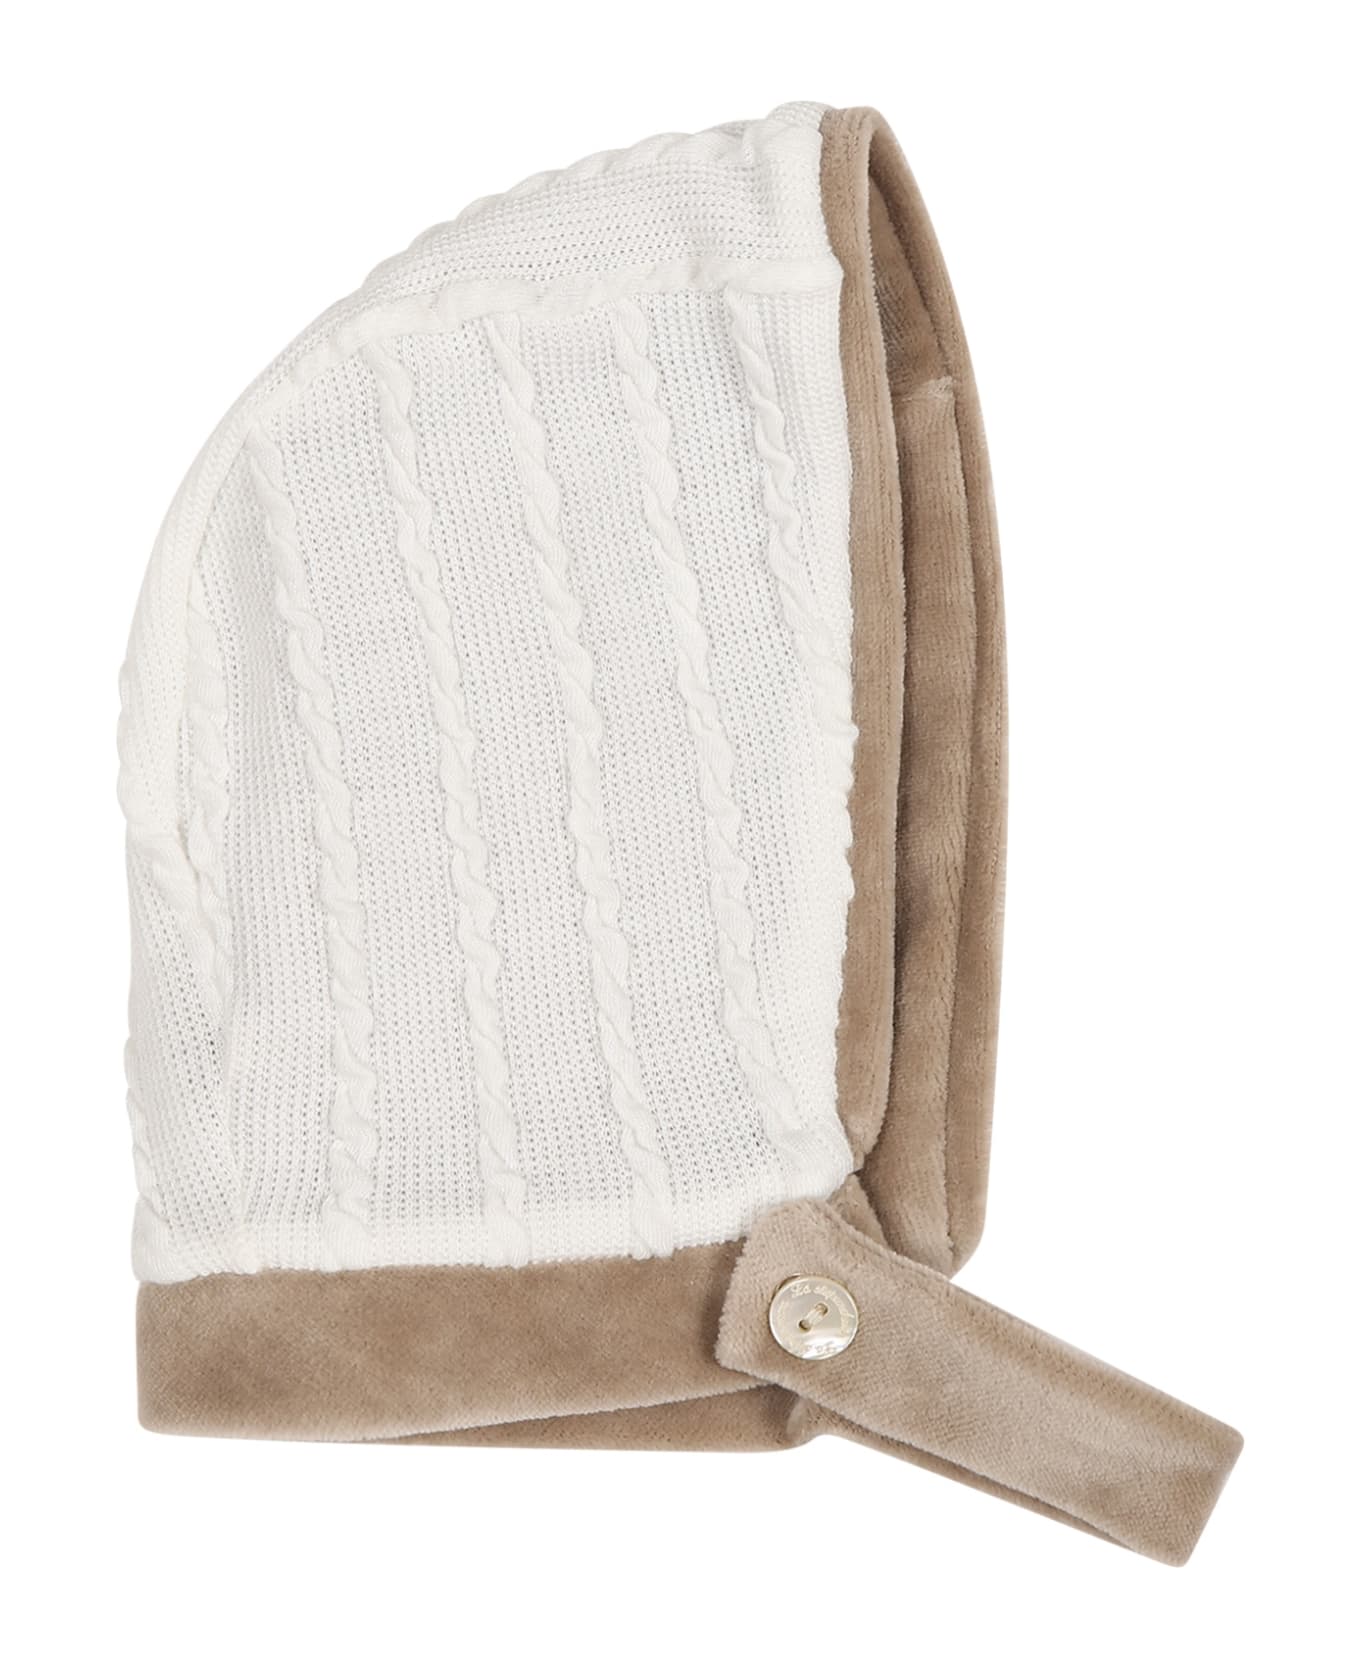 La stupenderia White Hat For Baby Girl - Ivory